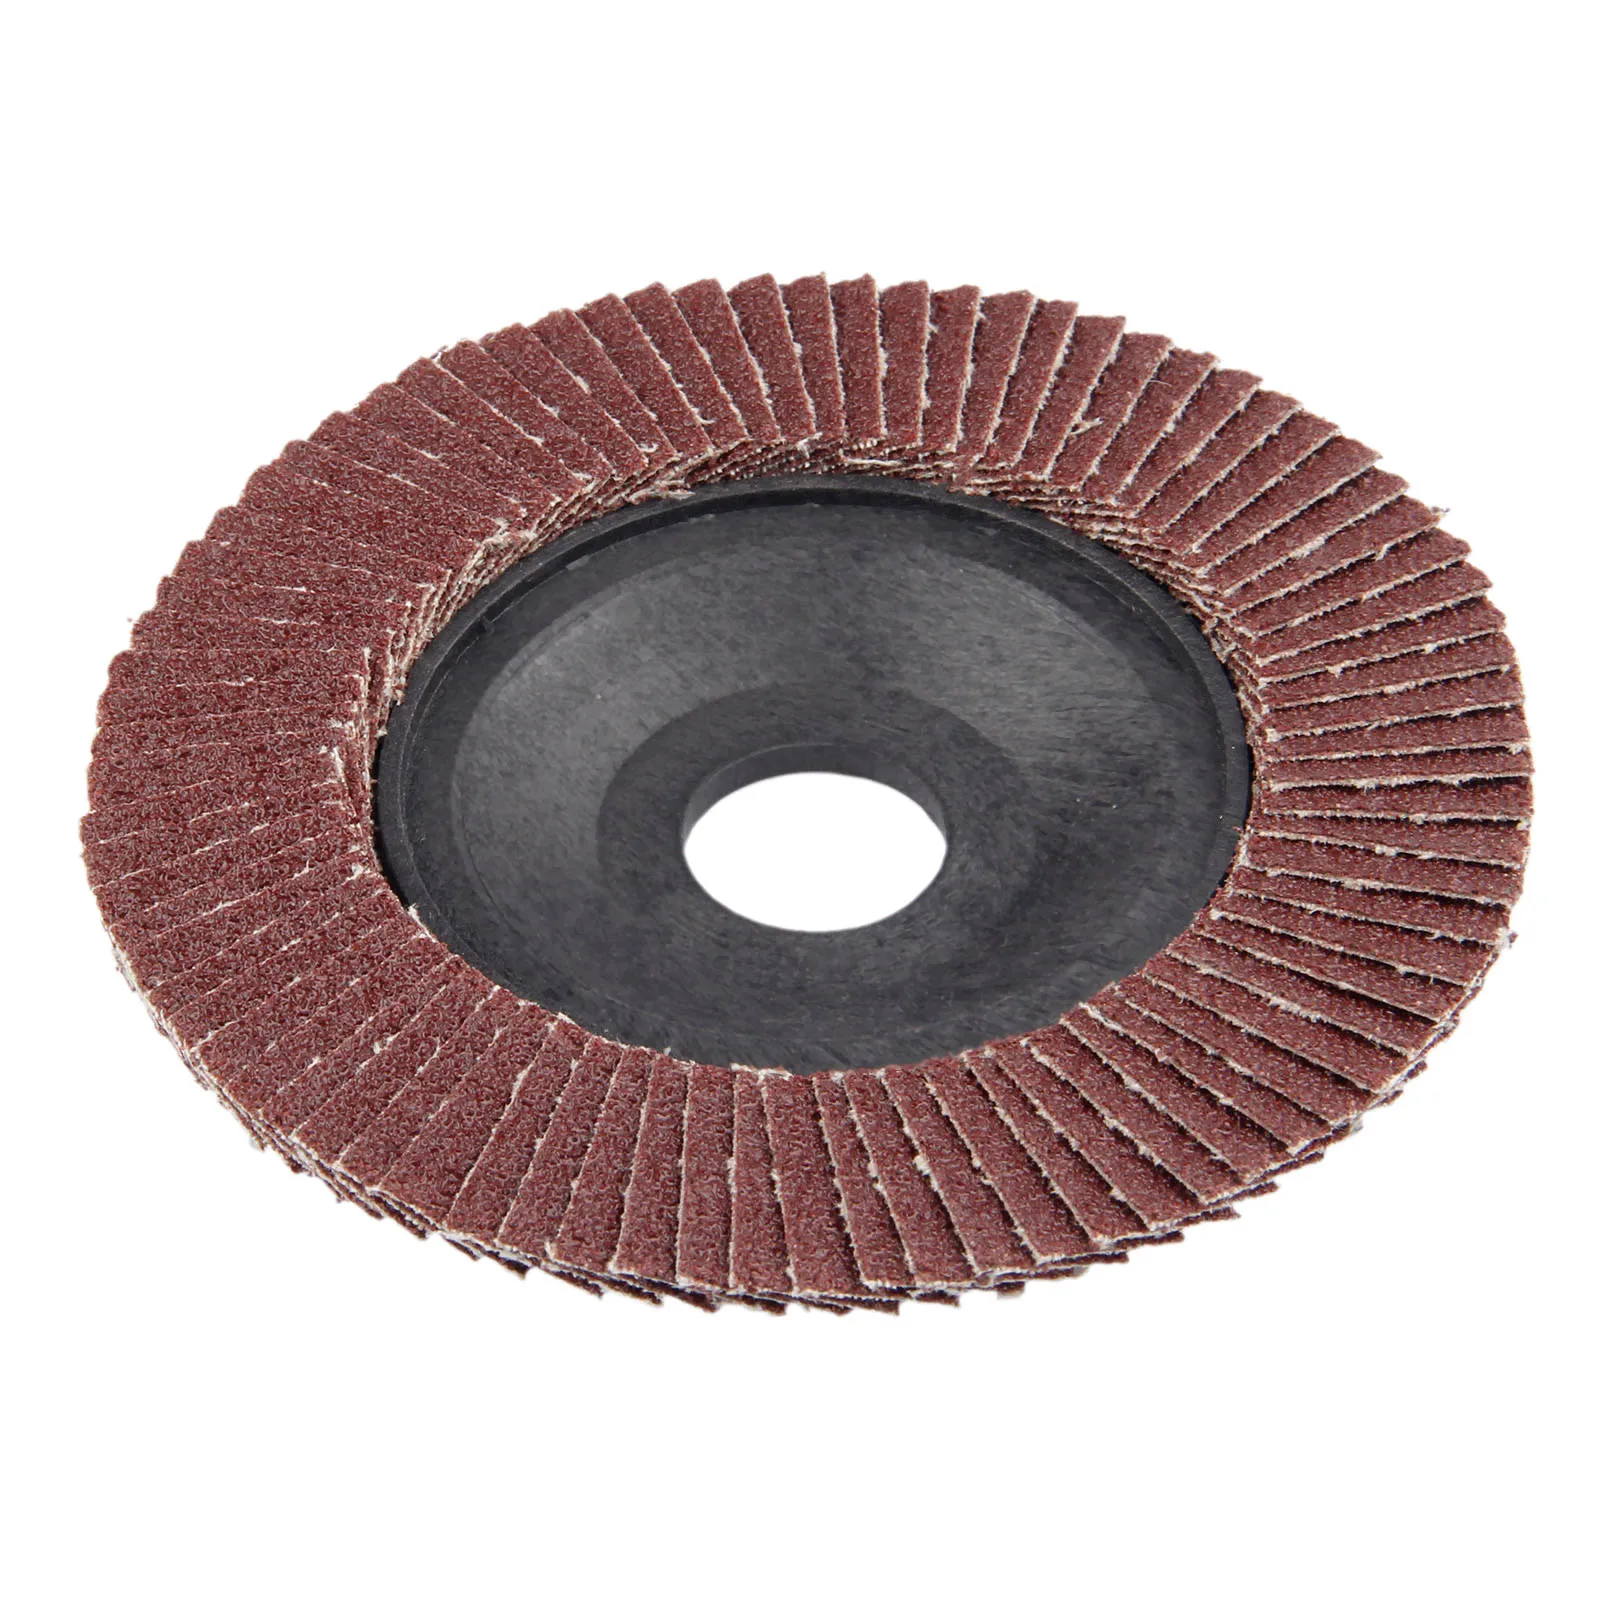 

DRELD 1Pc 5 Inch 125mm Sanding Flap Discs Polishing Grinding Wheel Abrasive Tools Grit 60 for Angle Grinder Dremel Rotary Tool